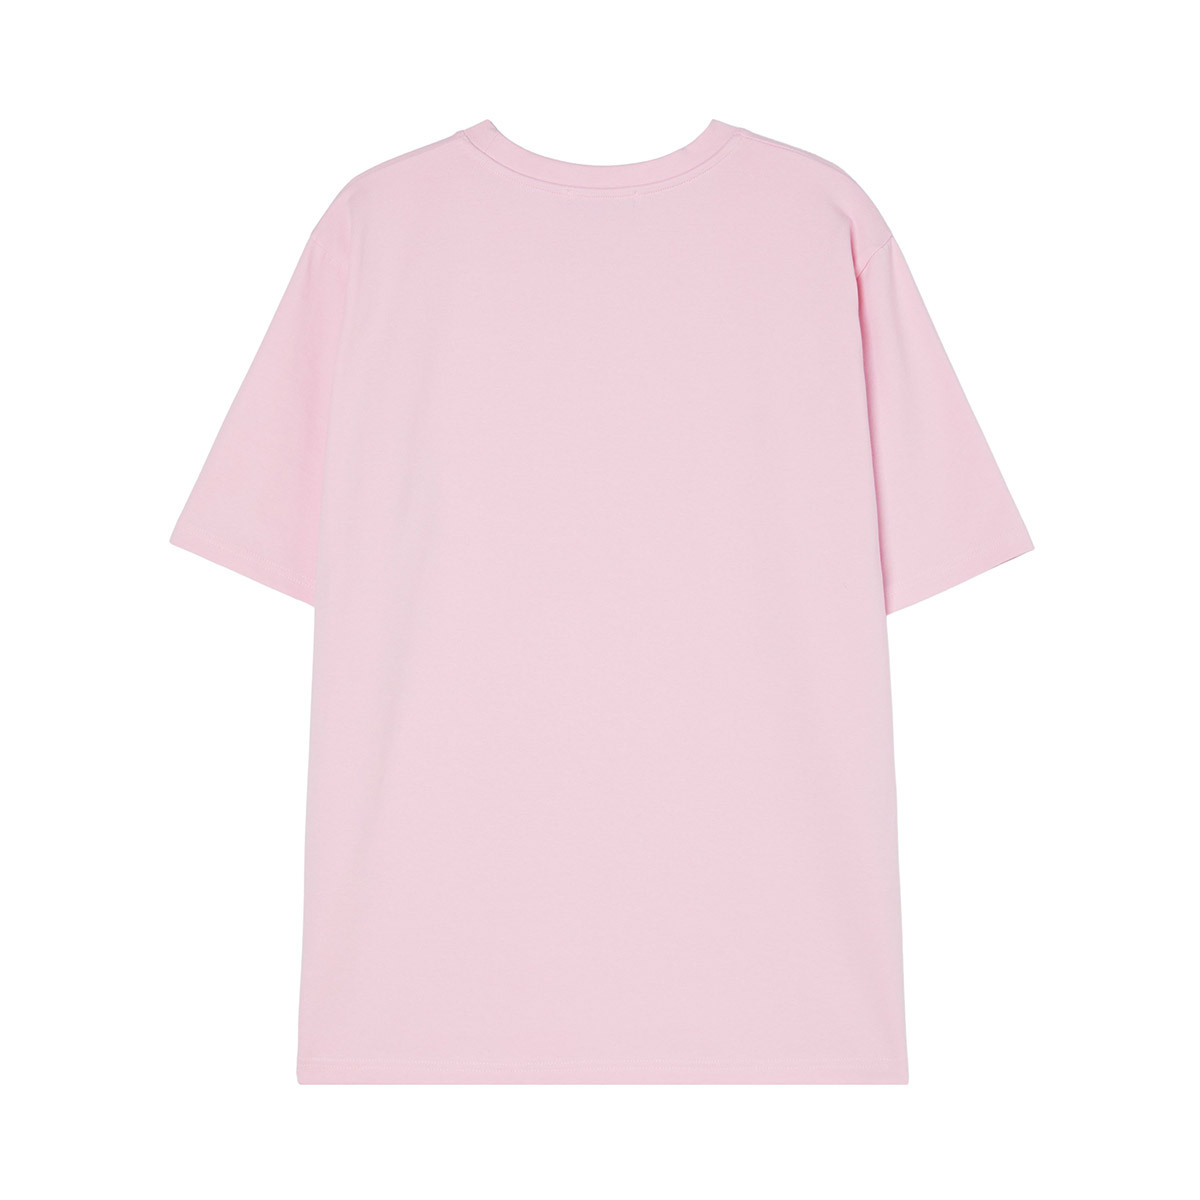 LAP 여성 반소매 티셔츠 - 핑크